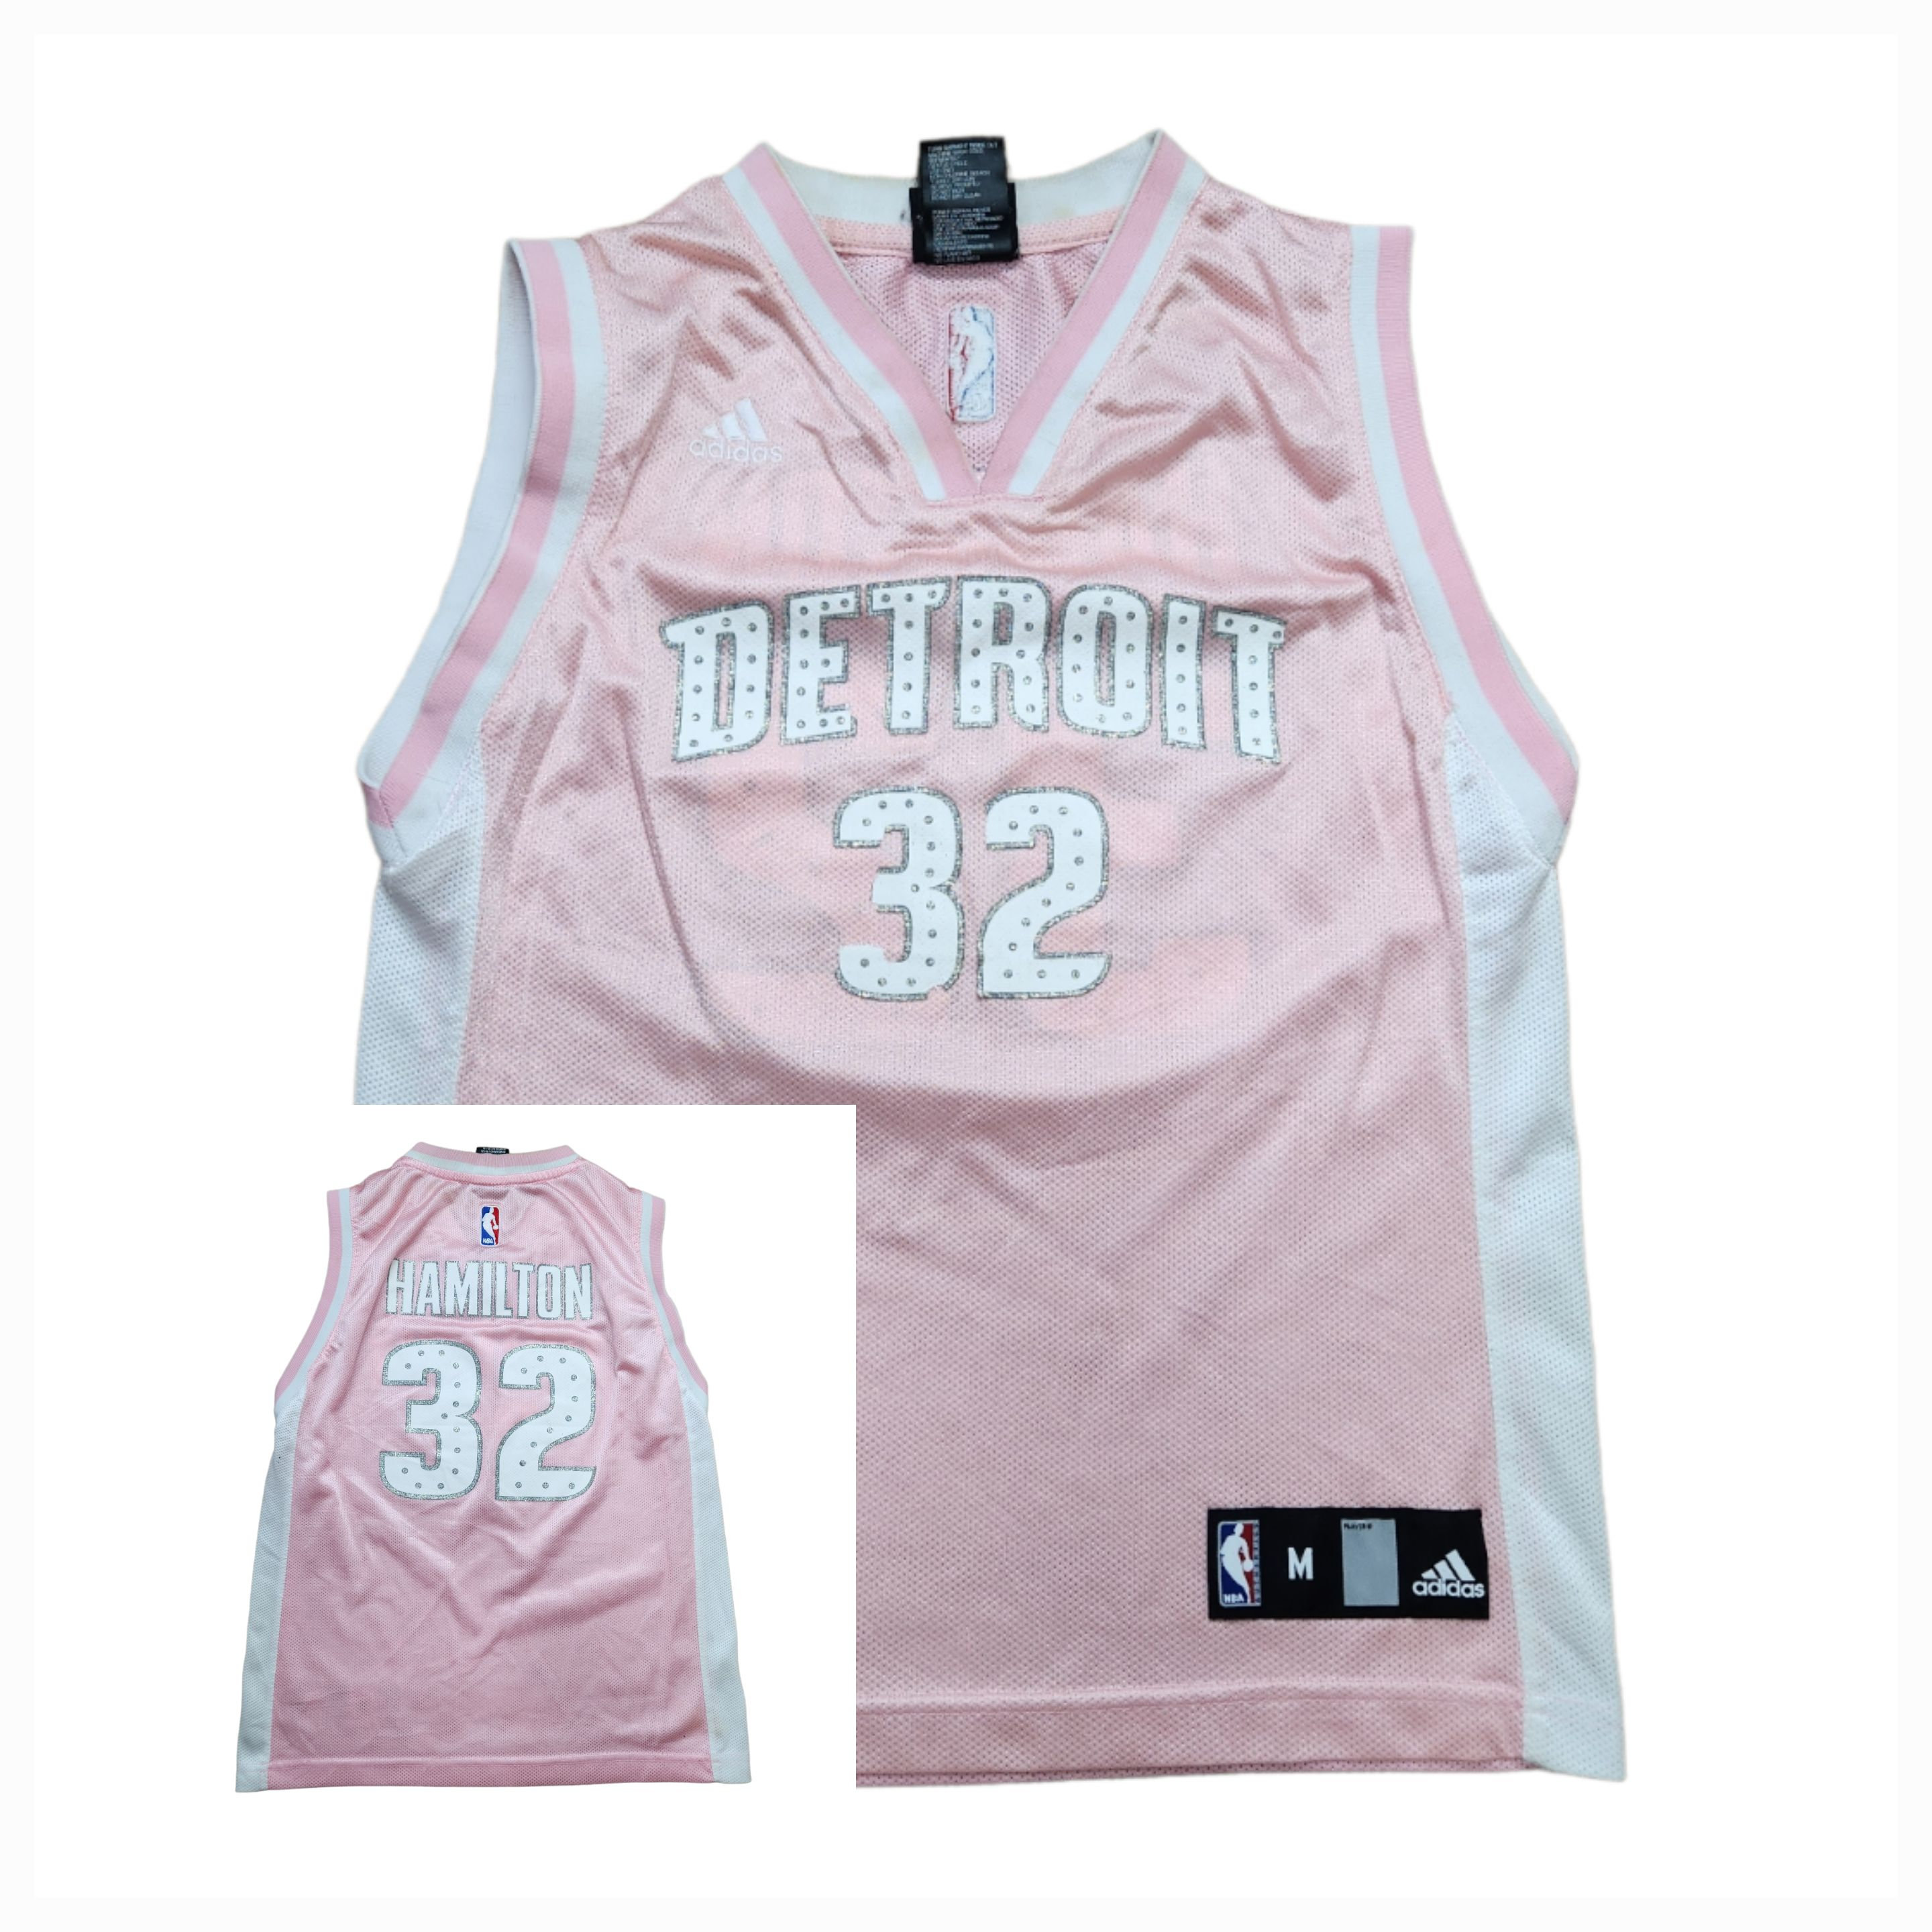 adidas, Shirts, New Orleans Hornets 32 Basketball Jersey